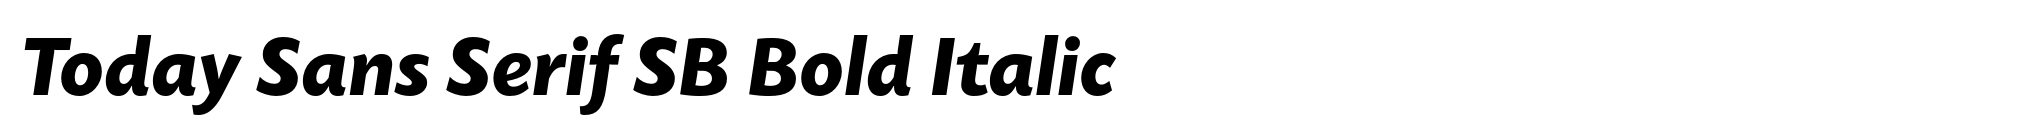 Today Sans Serif SB Bold Italic image